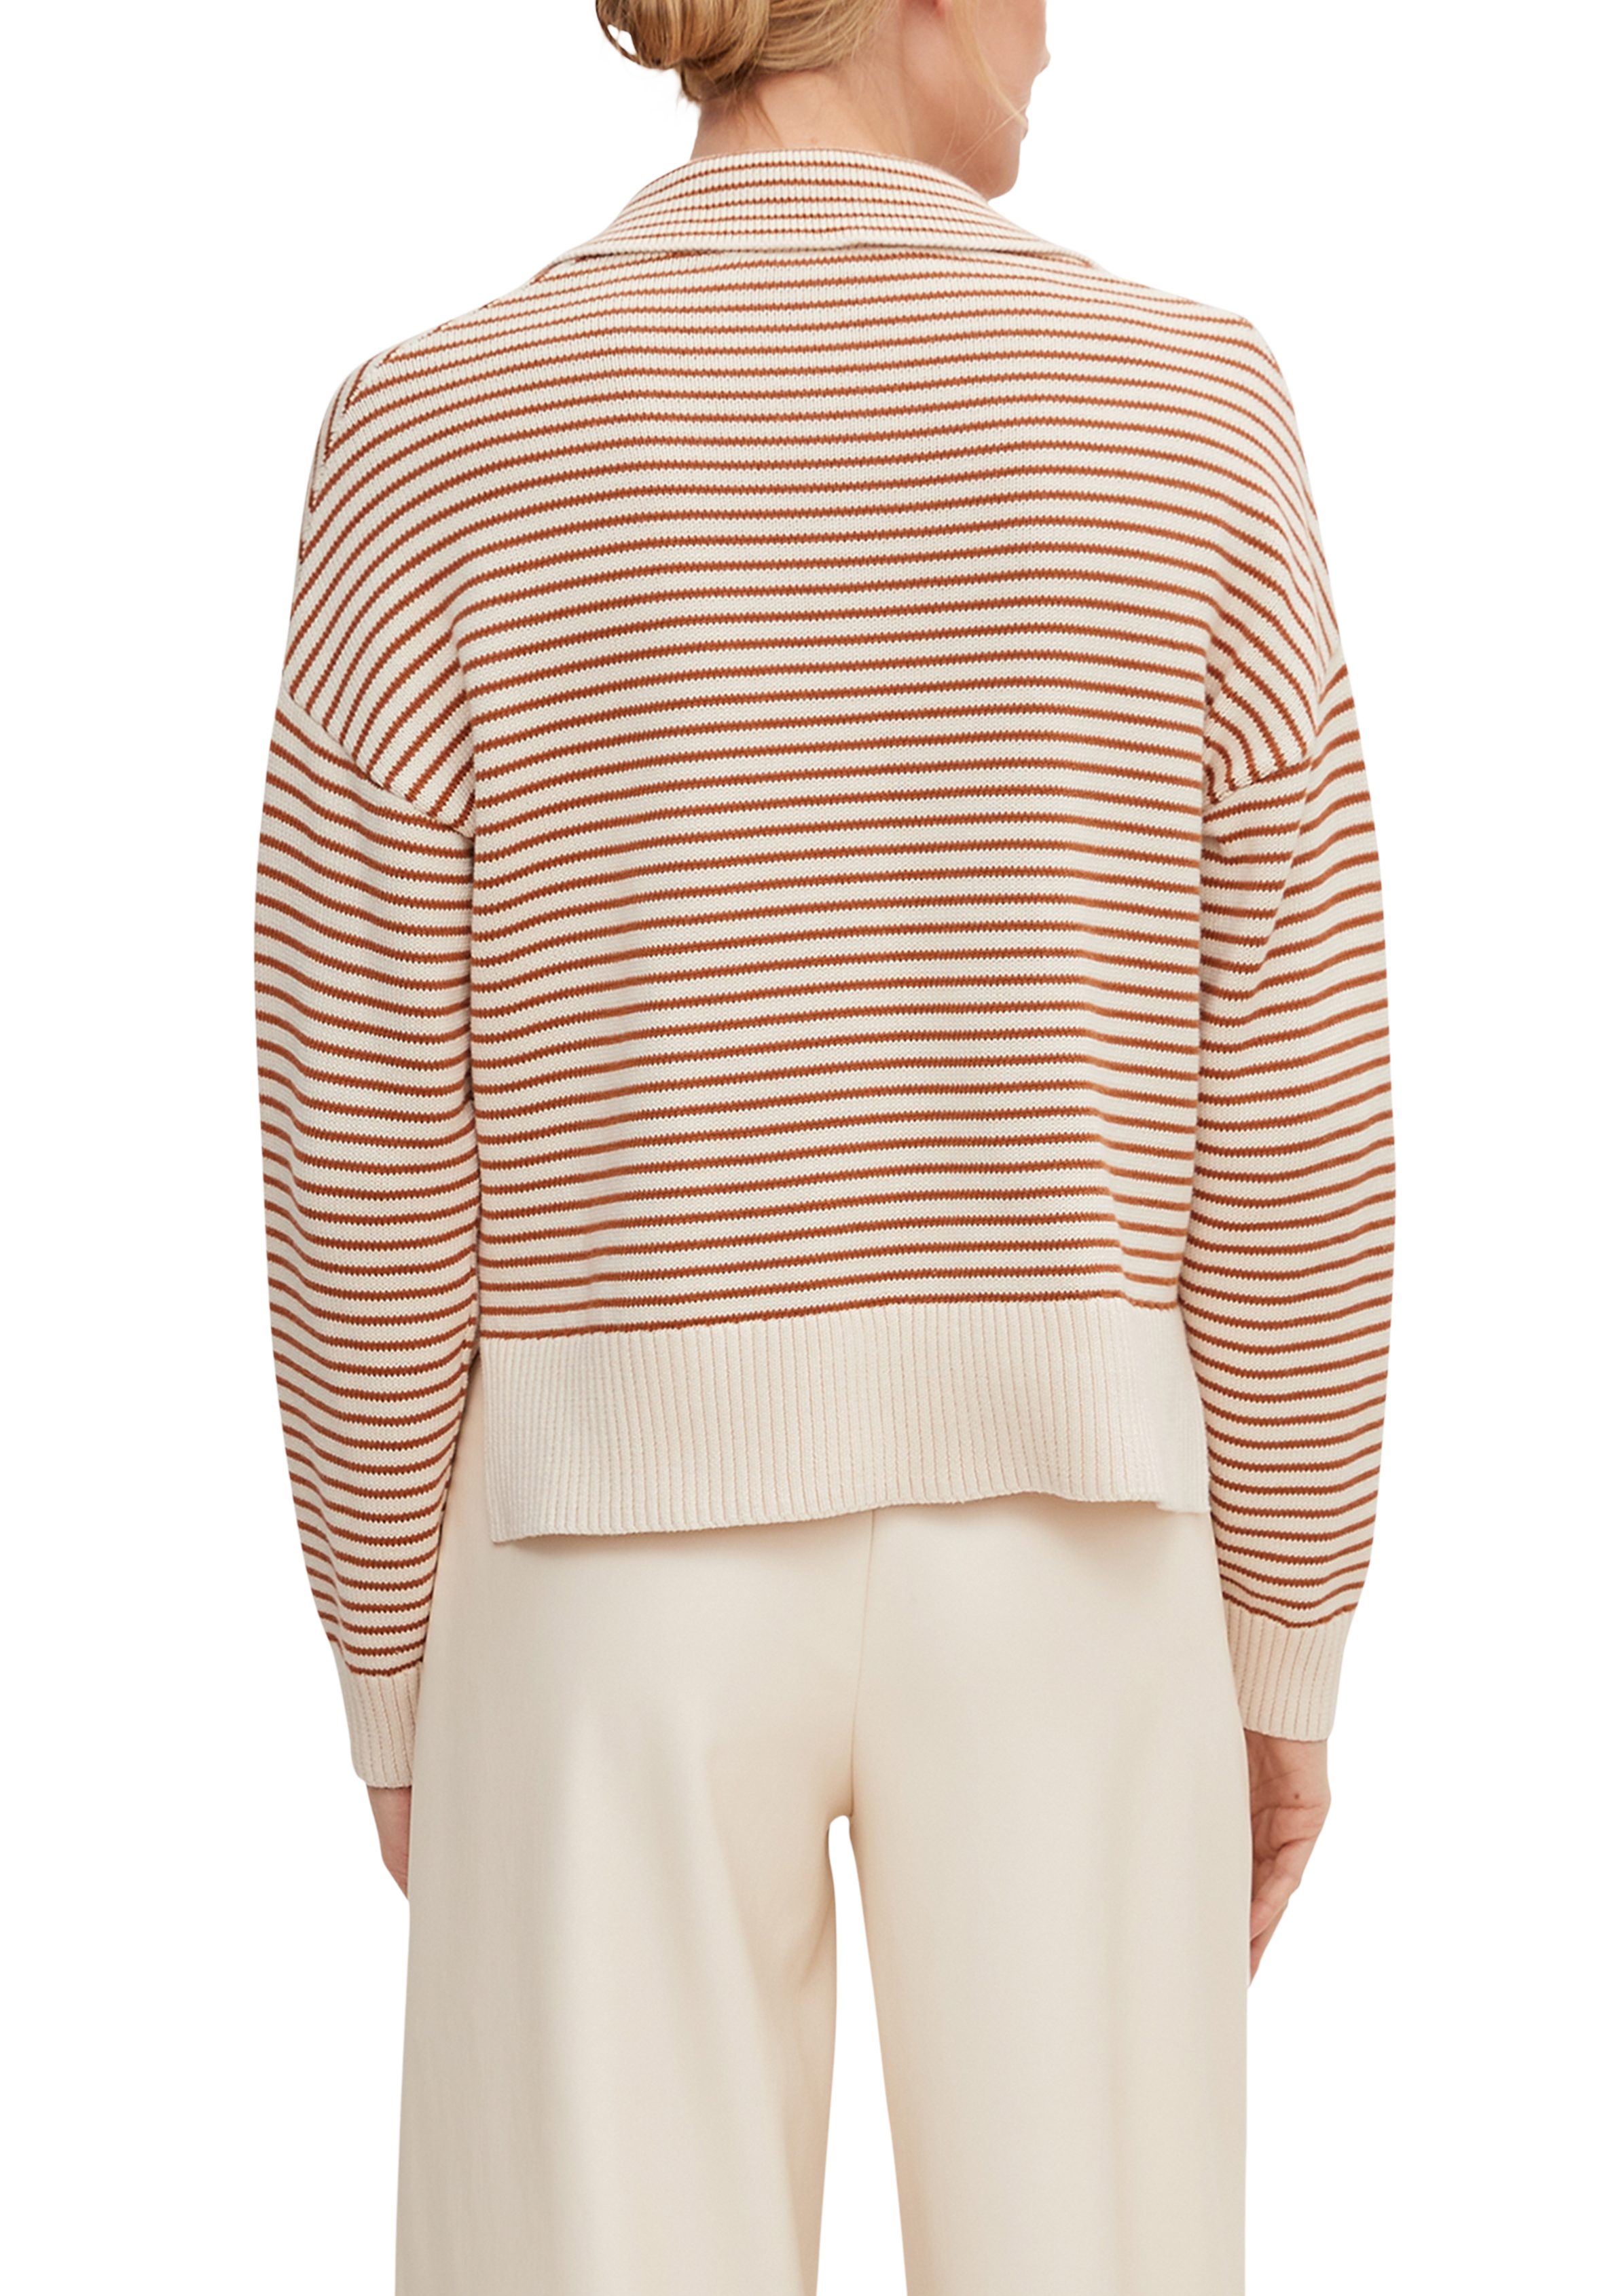 Comma Langarmshirt Pullover small Knit Streifen-Design stripes im